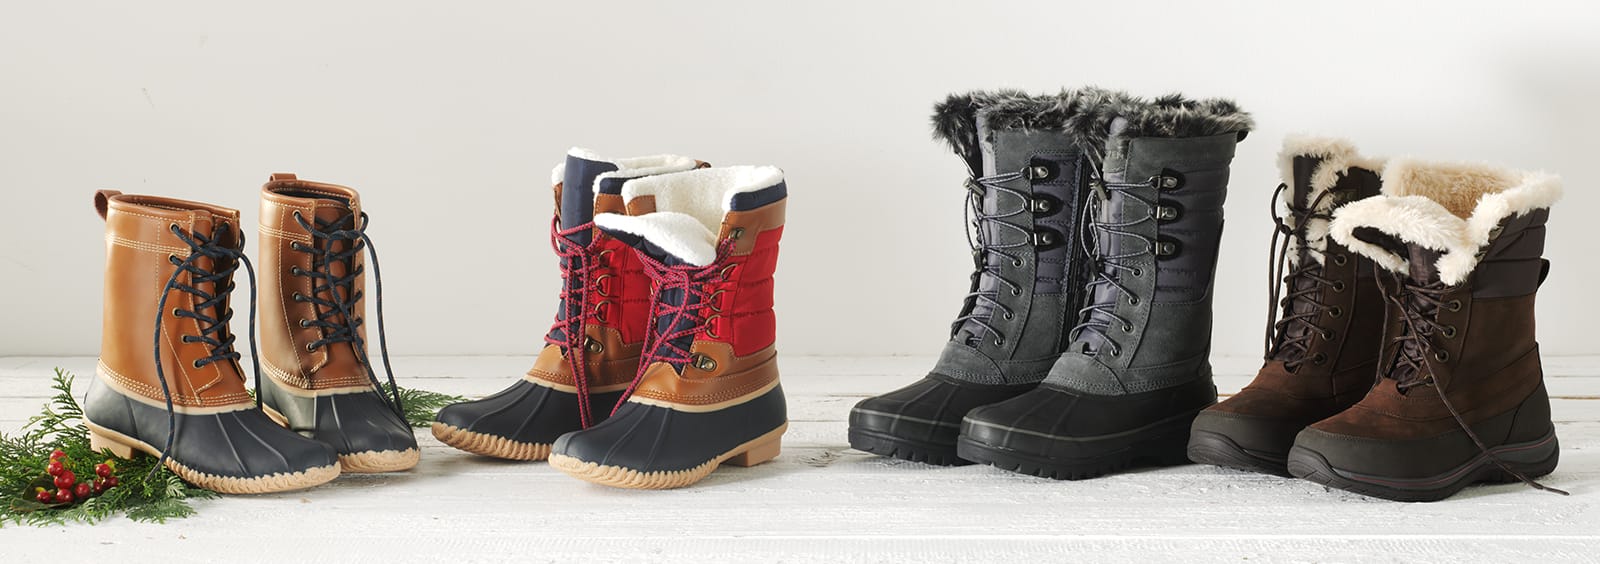 Best Snow Boots for Women | Lands' End